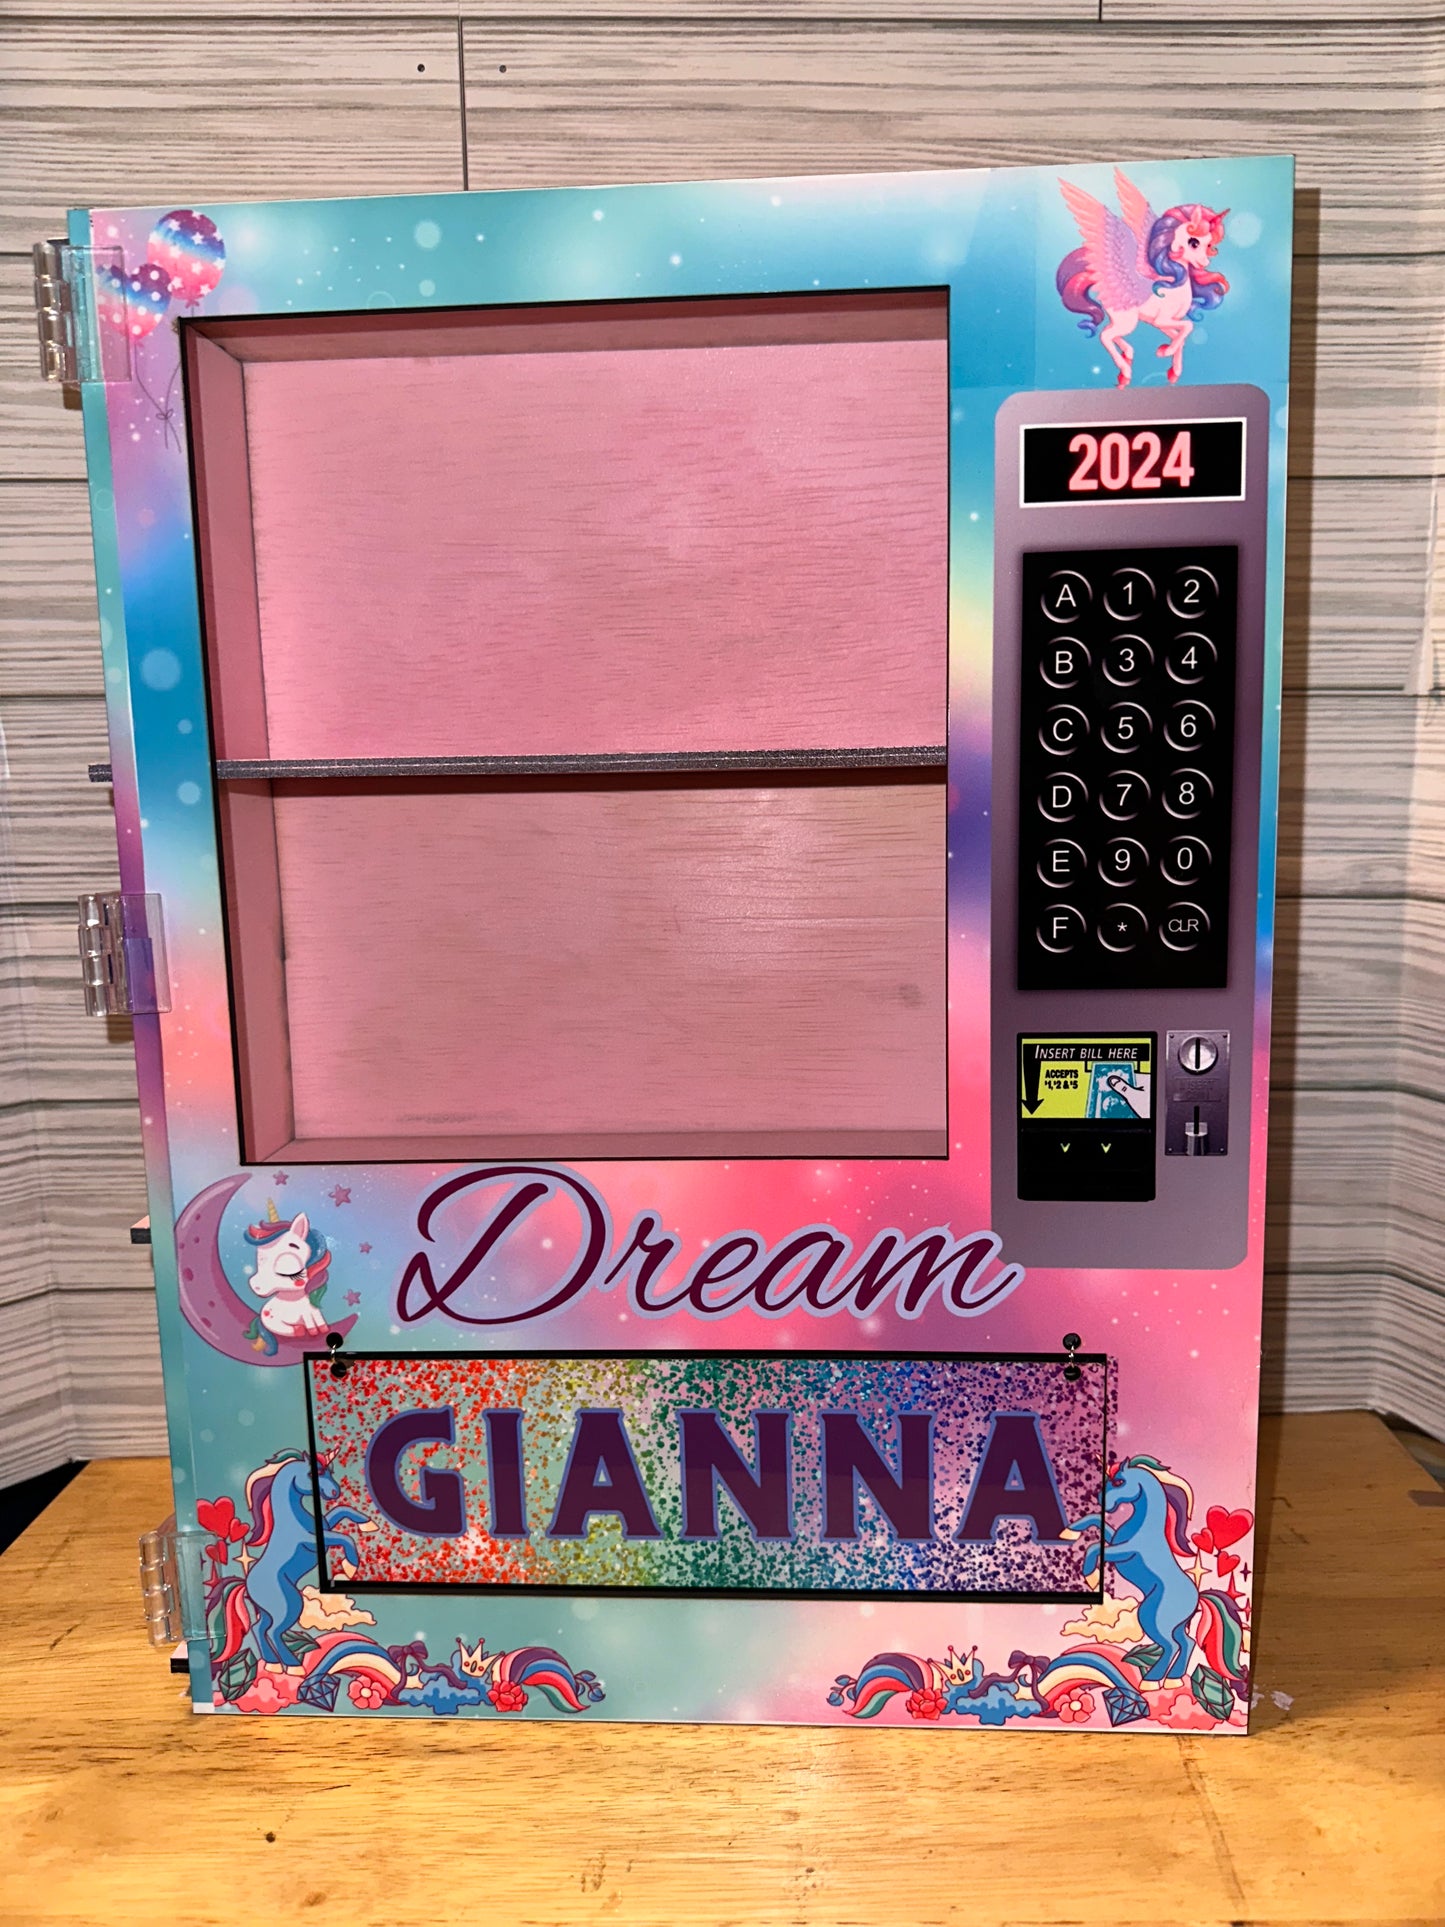 Custom vending machine